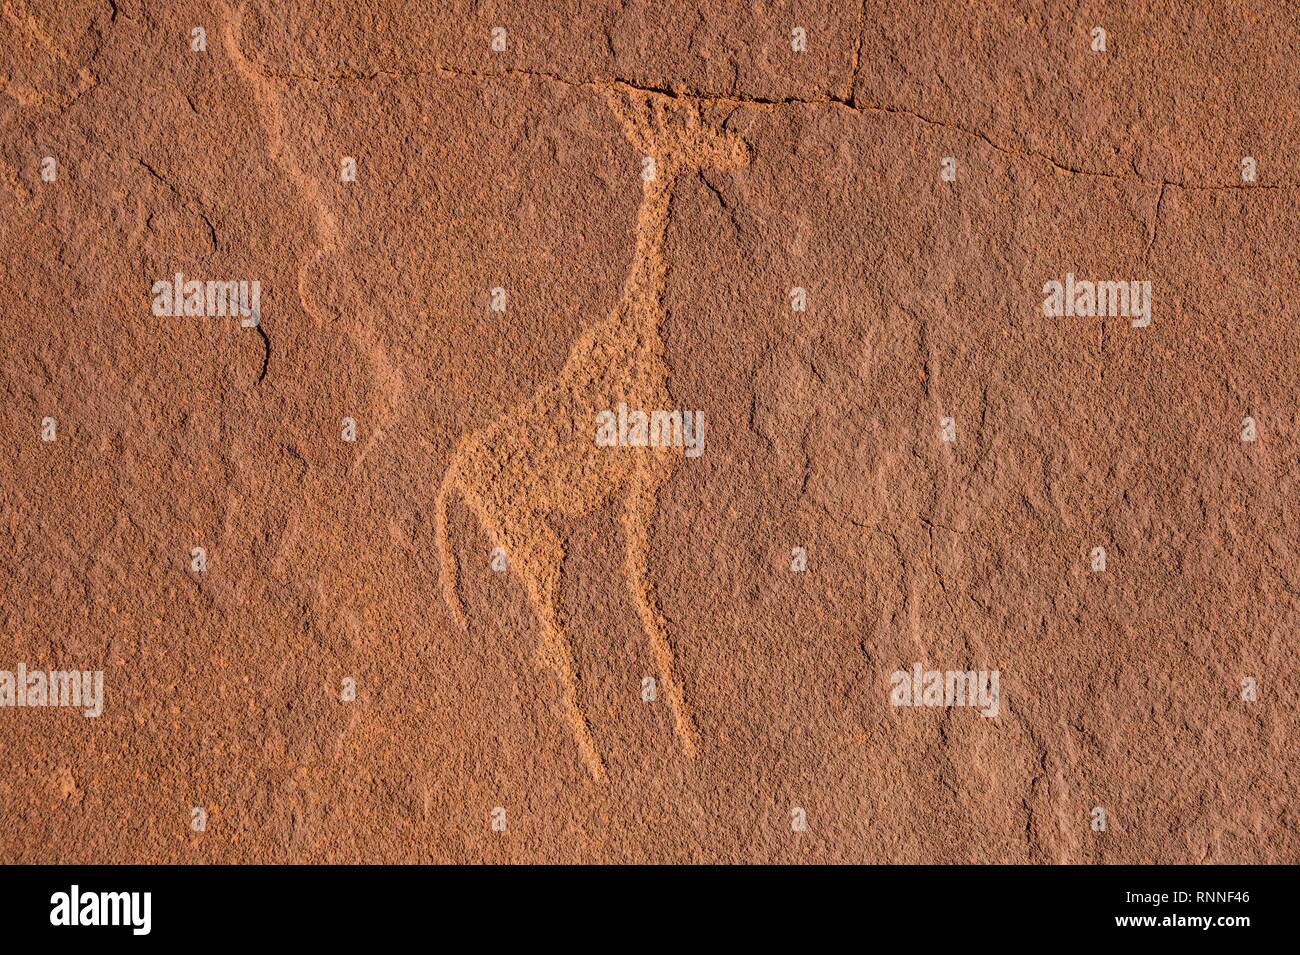 Ancient rock engravings, Twyfelfontein, Namibia Stock Photo